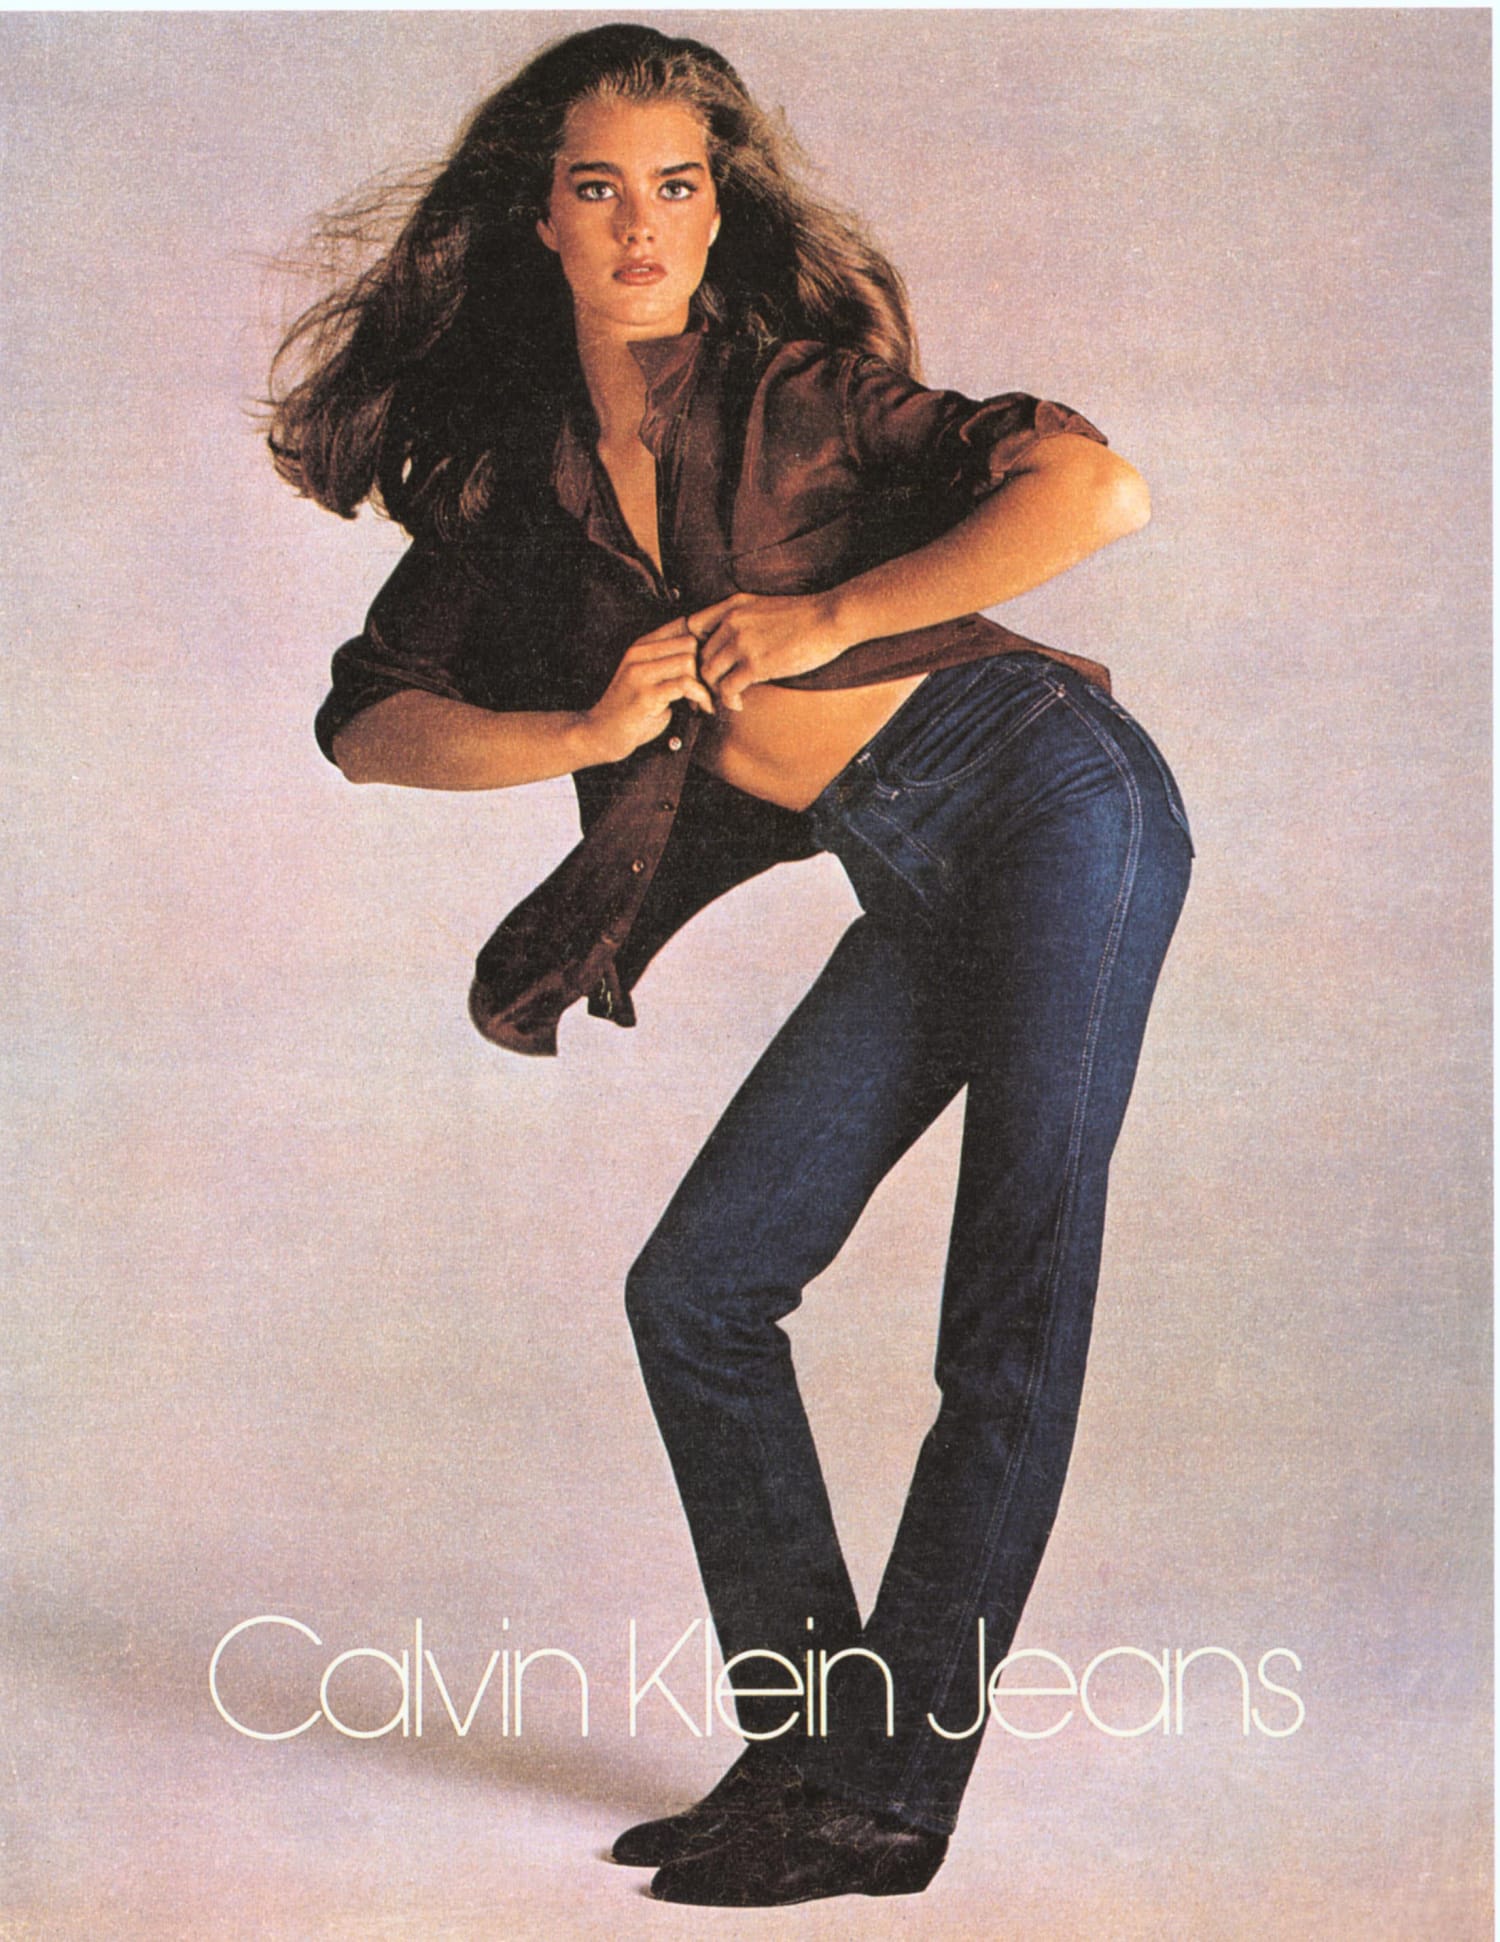 Brooke Shields responds to controversial 1980 Calvin Klein ad